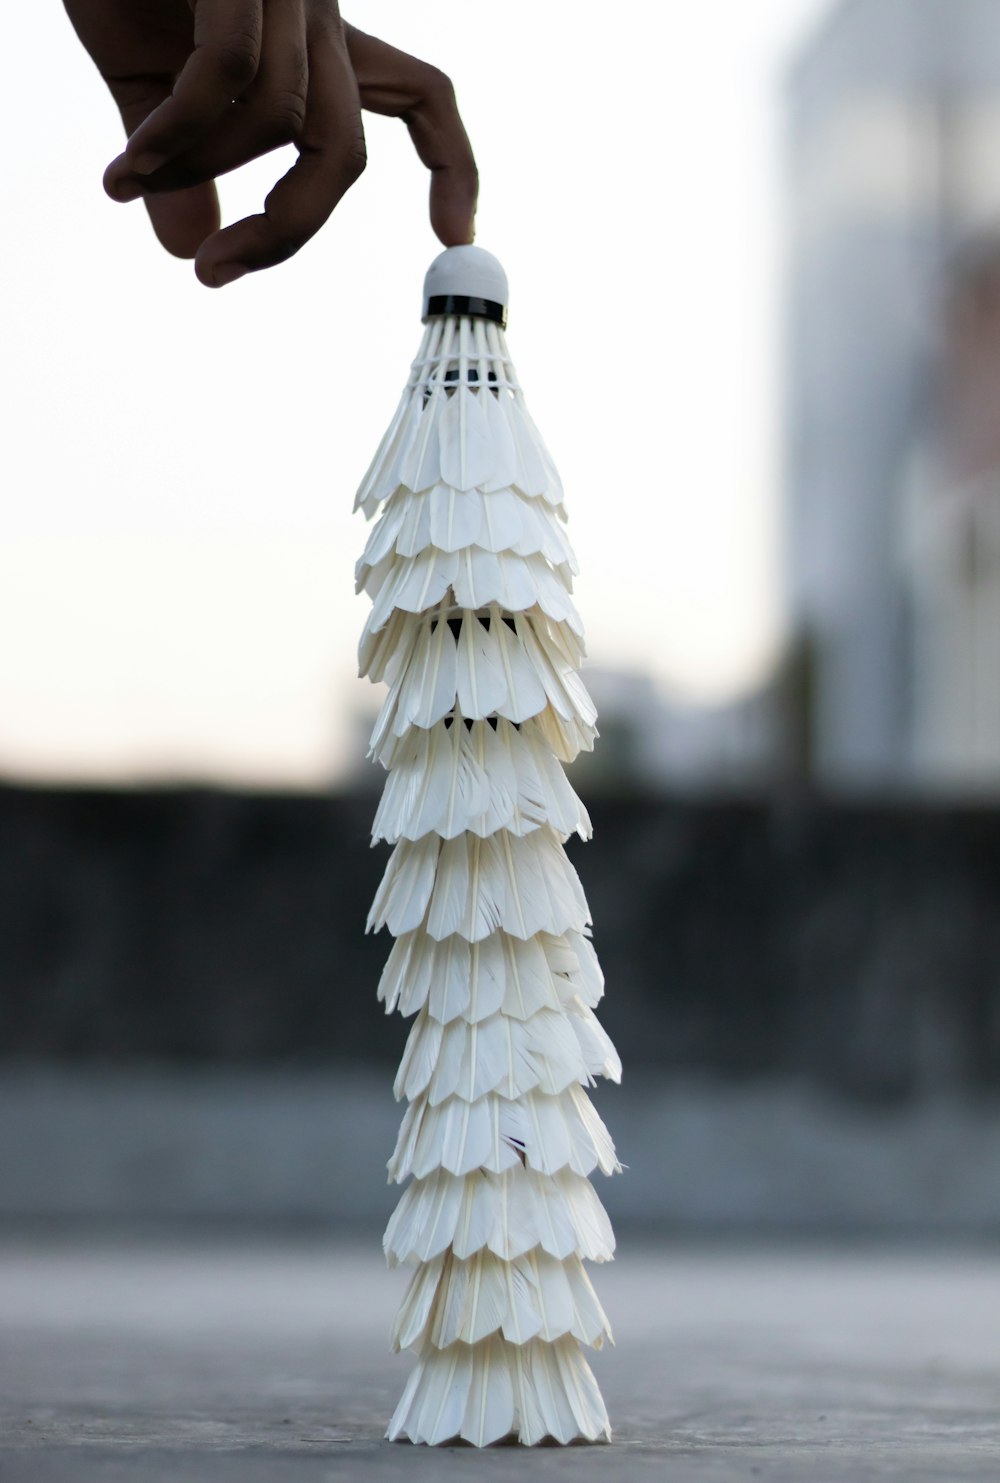 white wooden cone shaped decor